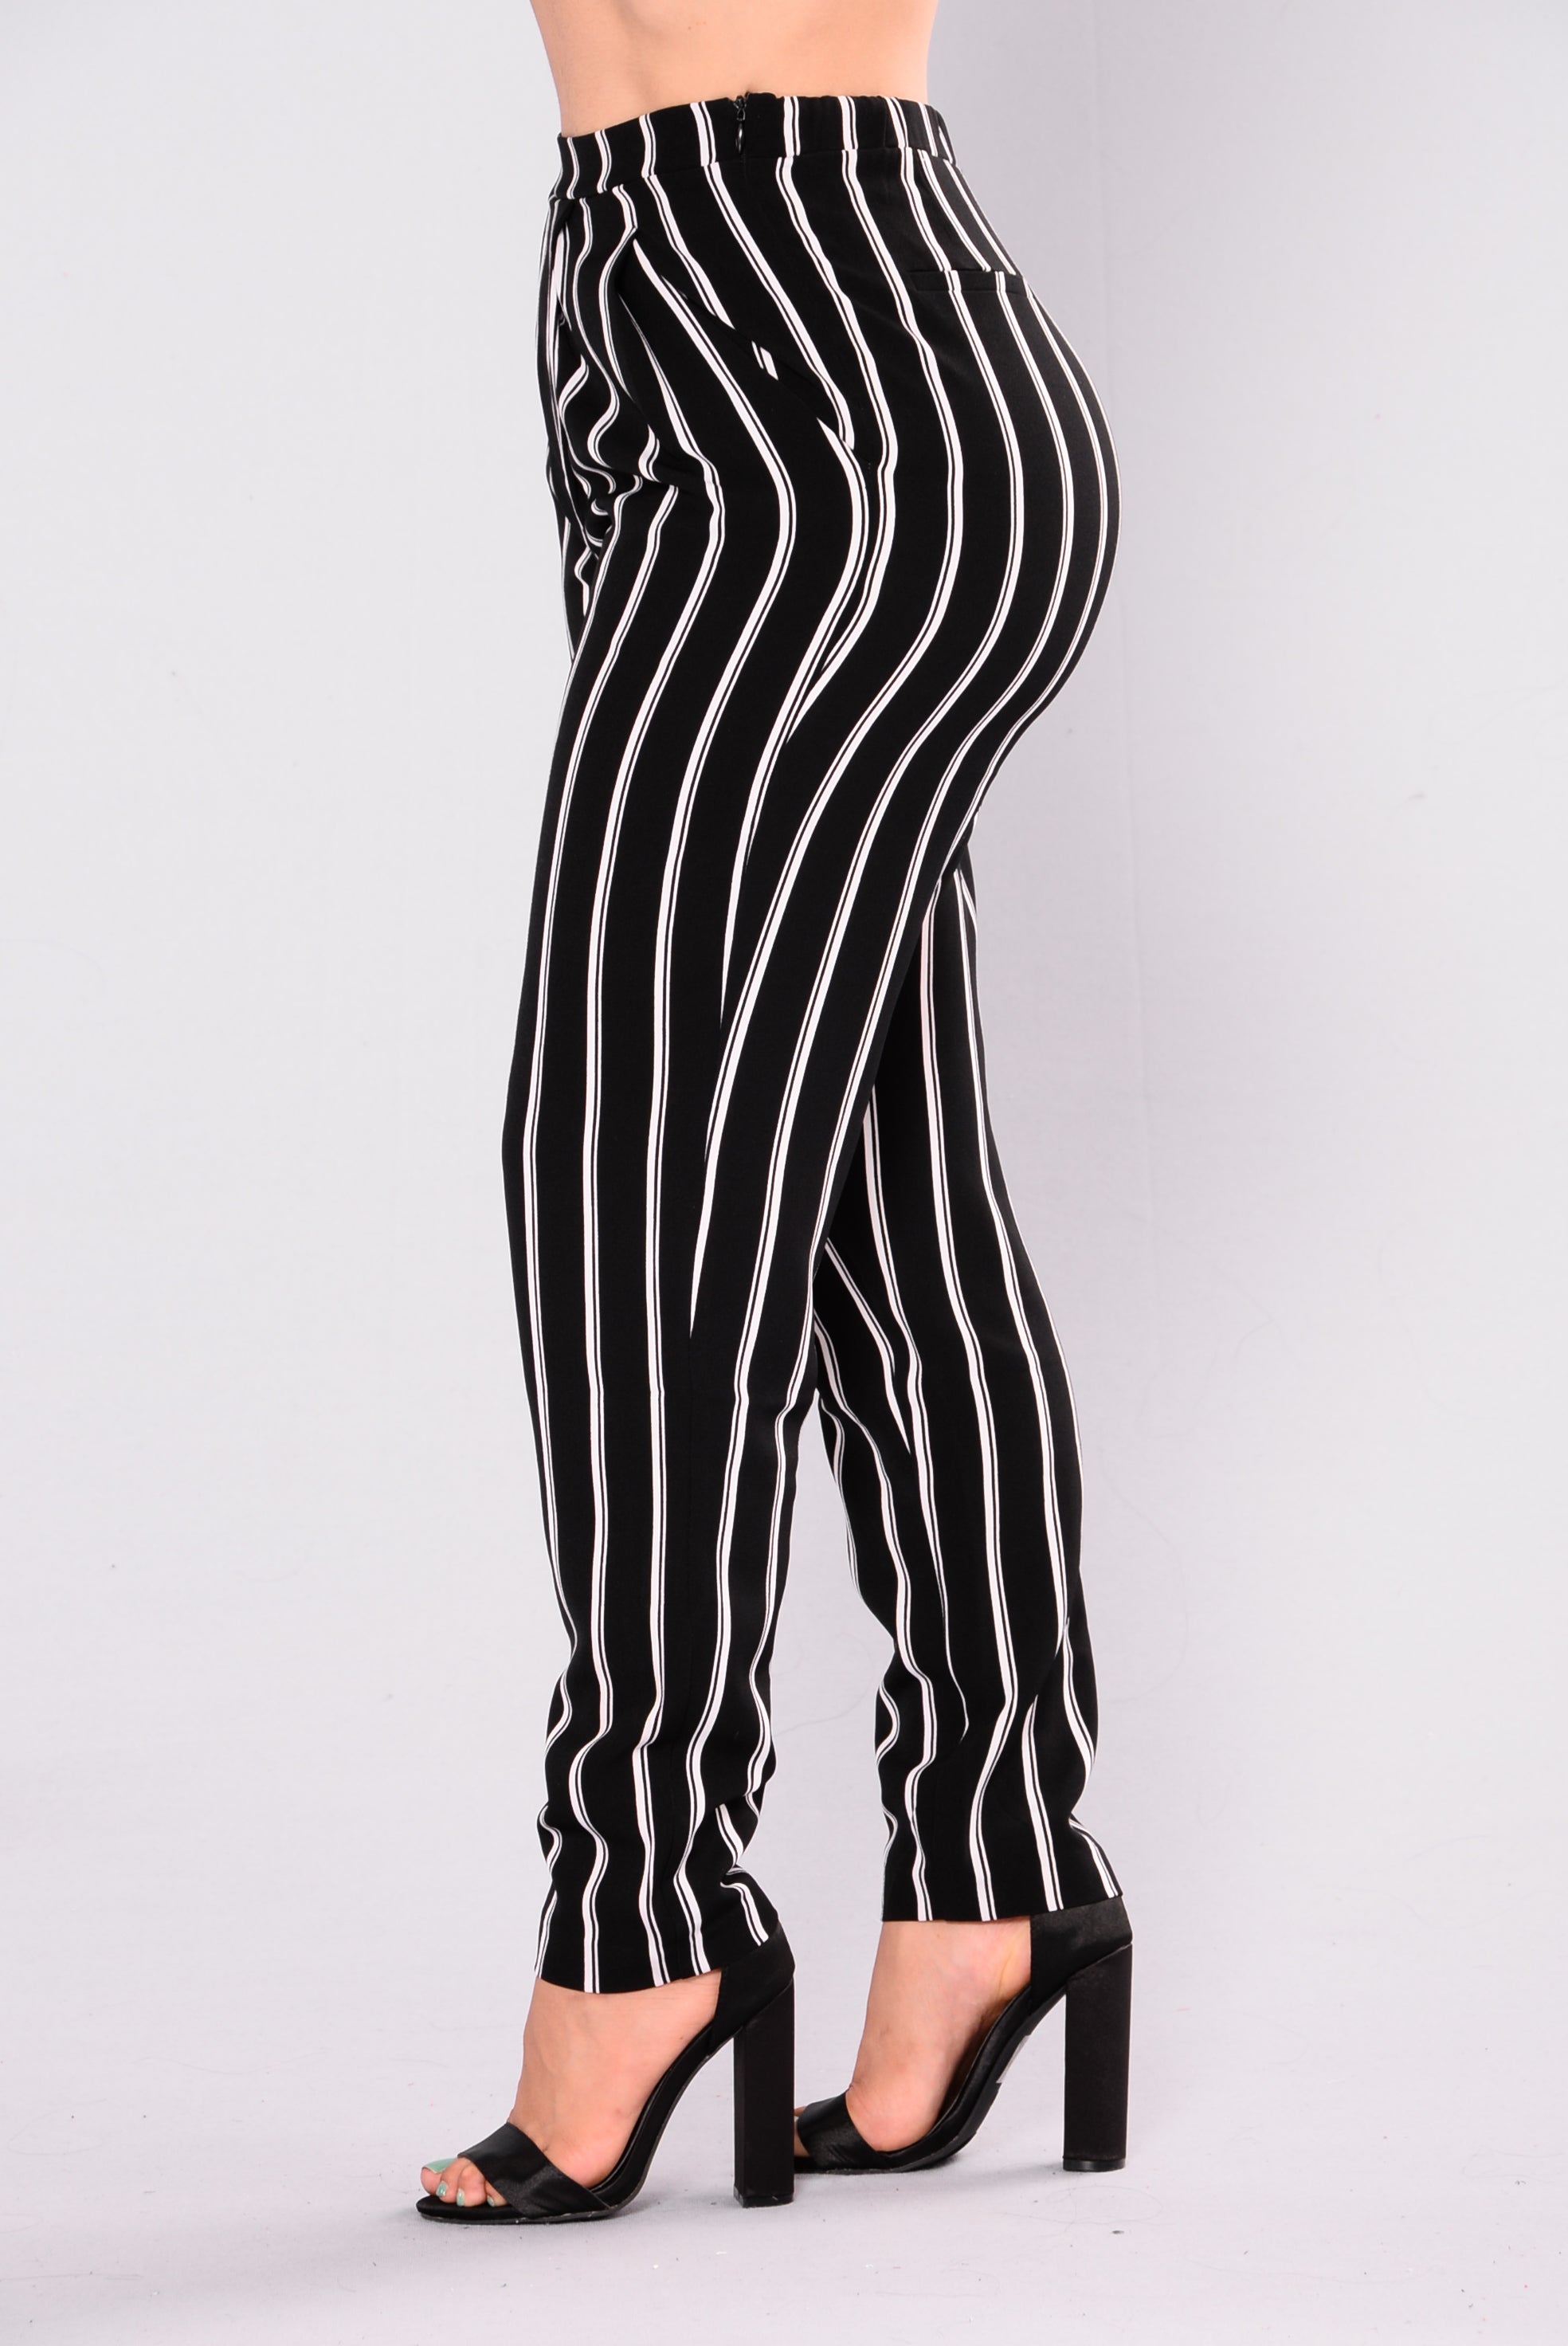 Tati Stripe Dressy Pants - Black/White